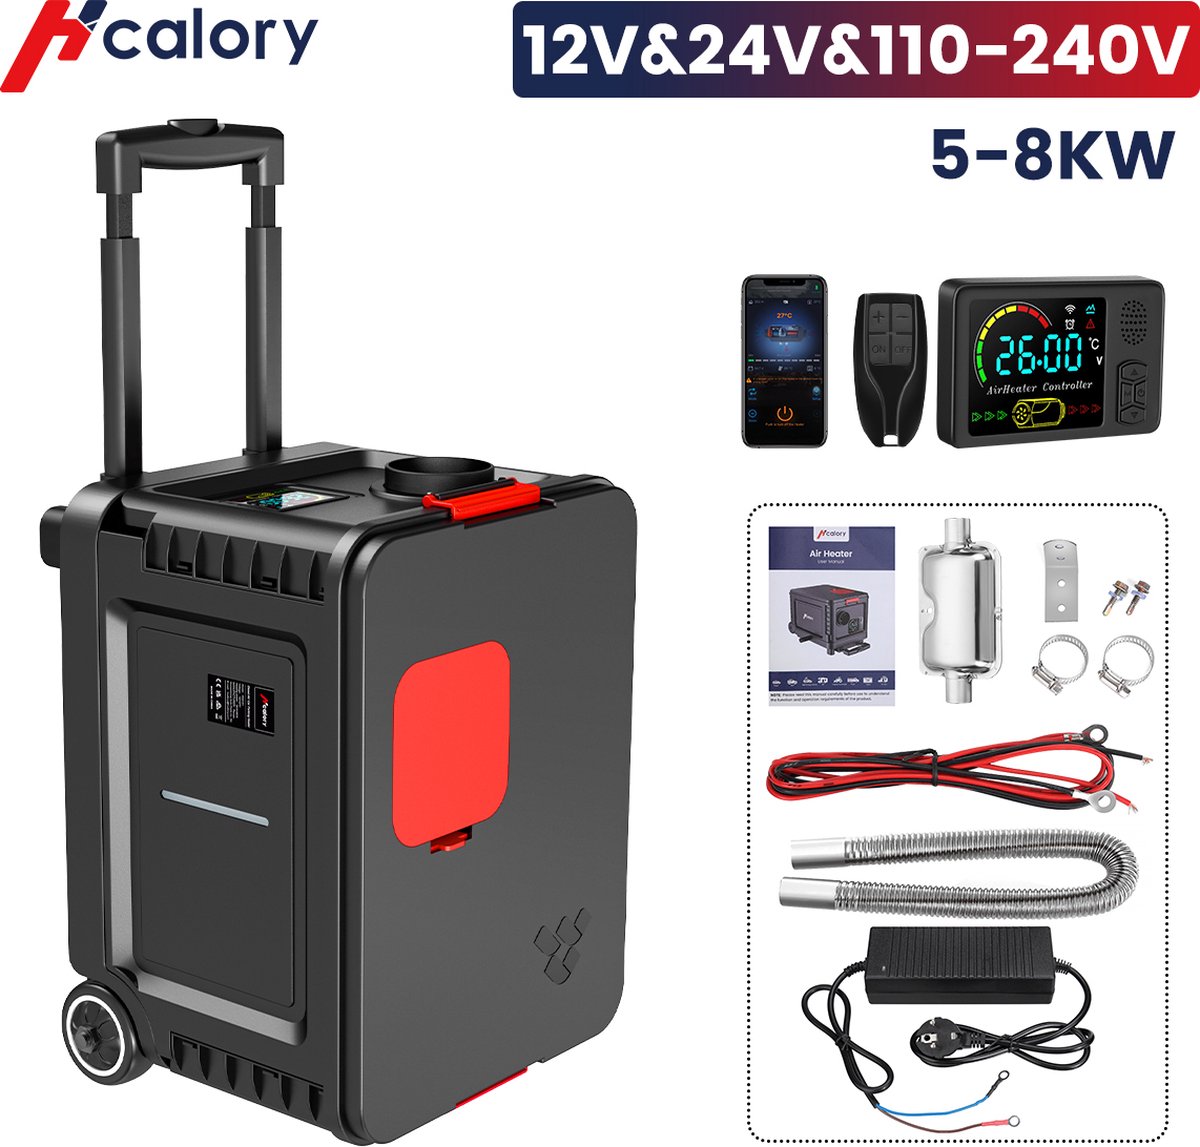 Hcalory hc-a02 12v 24v 5-8kw bluetooth parking diesel air heater caravan rv